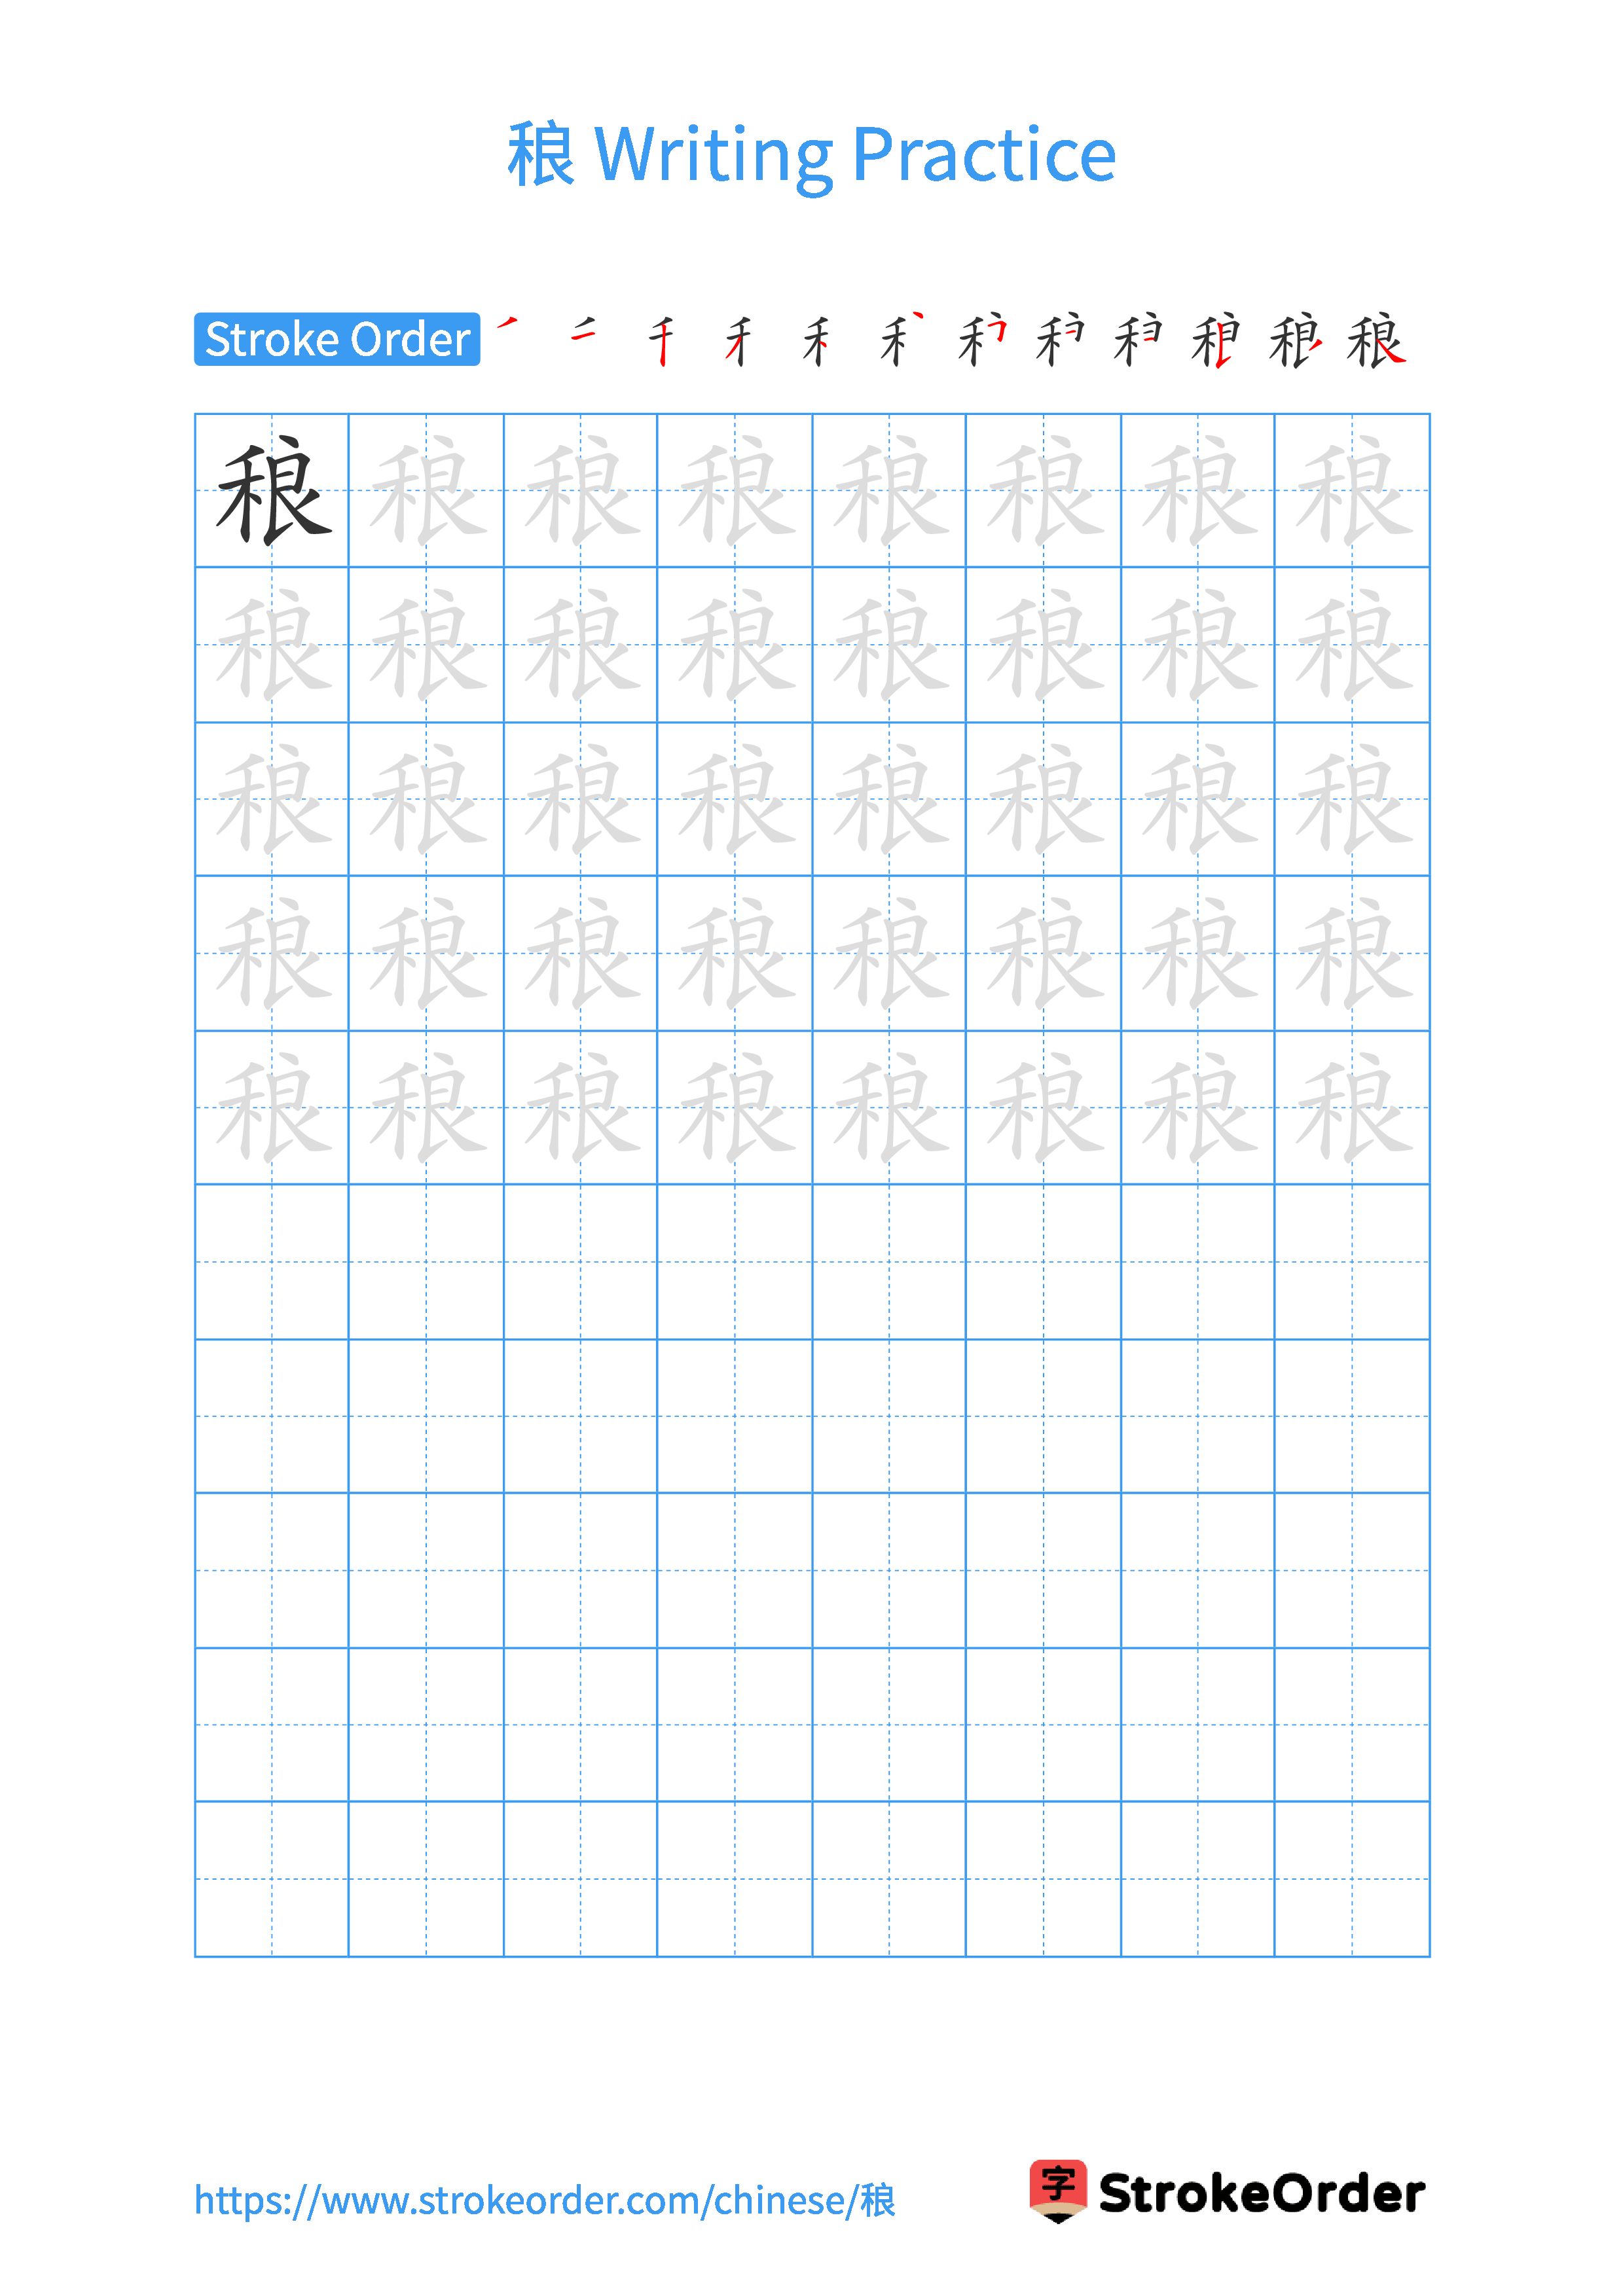 Printable Handwriting Practice Worksheet of the Chinese character 稂 in Portrait Orientation (Tian Zi Ge)